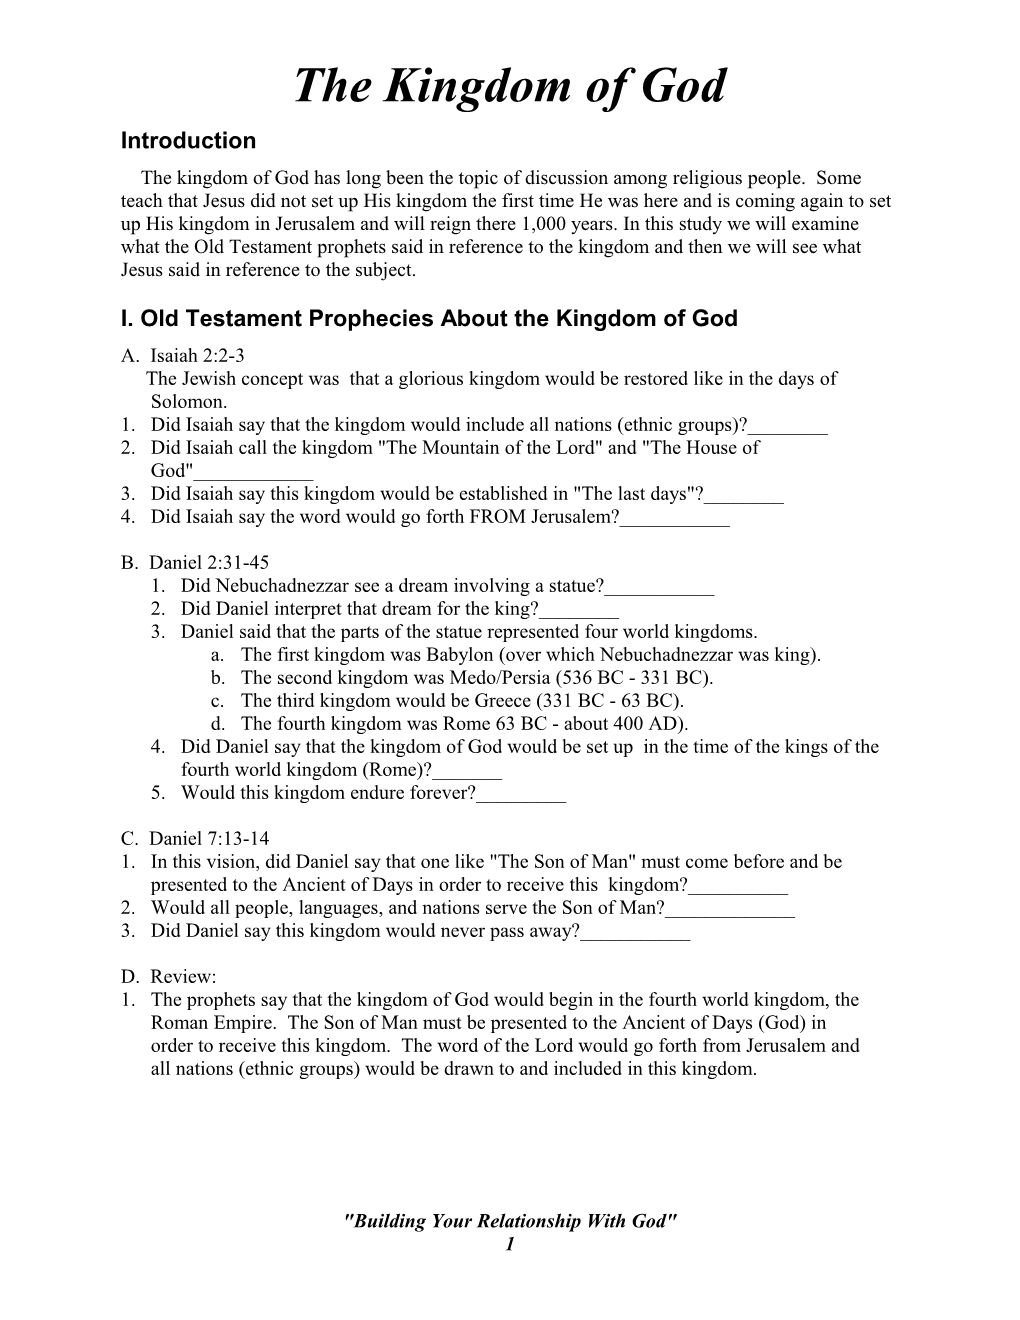 I. Old Testament Prophecies About the Kingdom of God